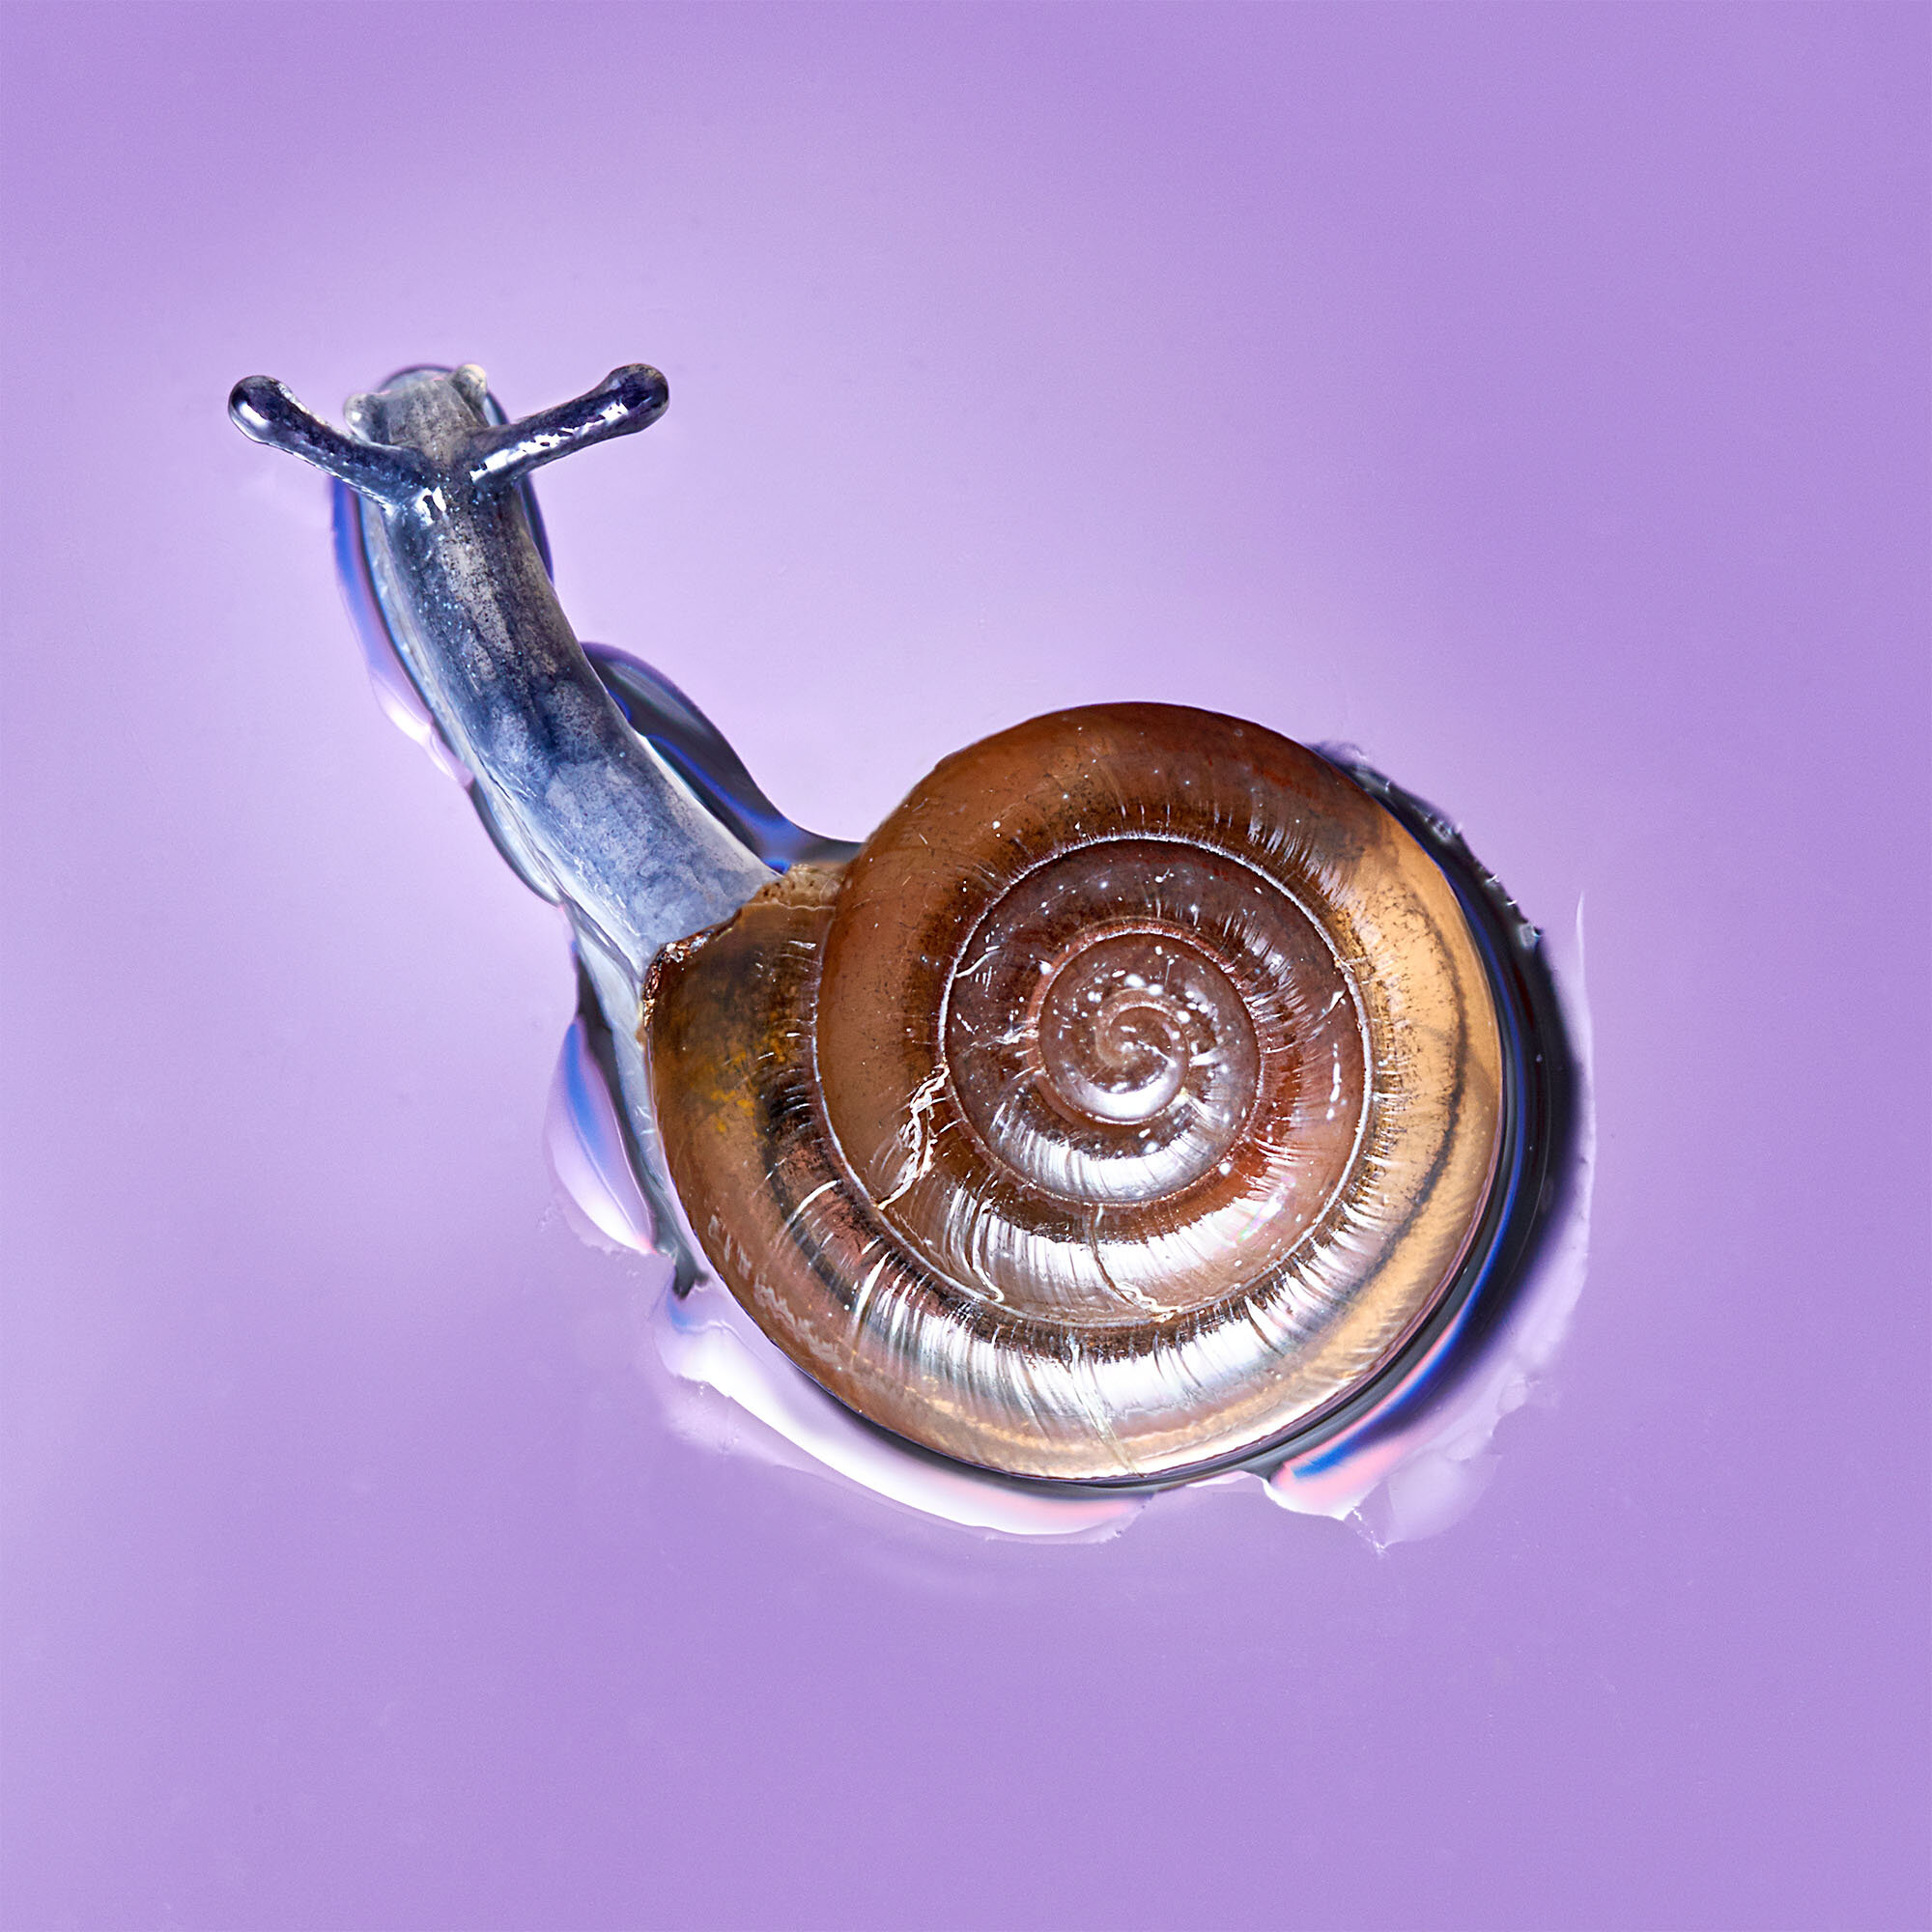 Draparnaud's glass snail